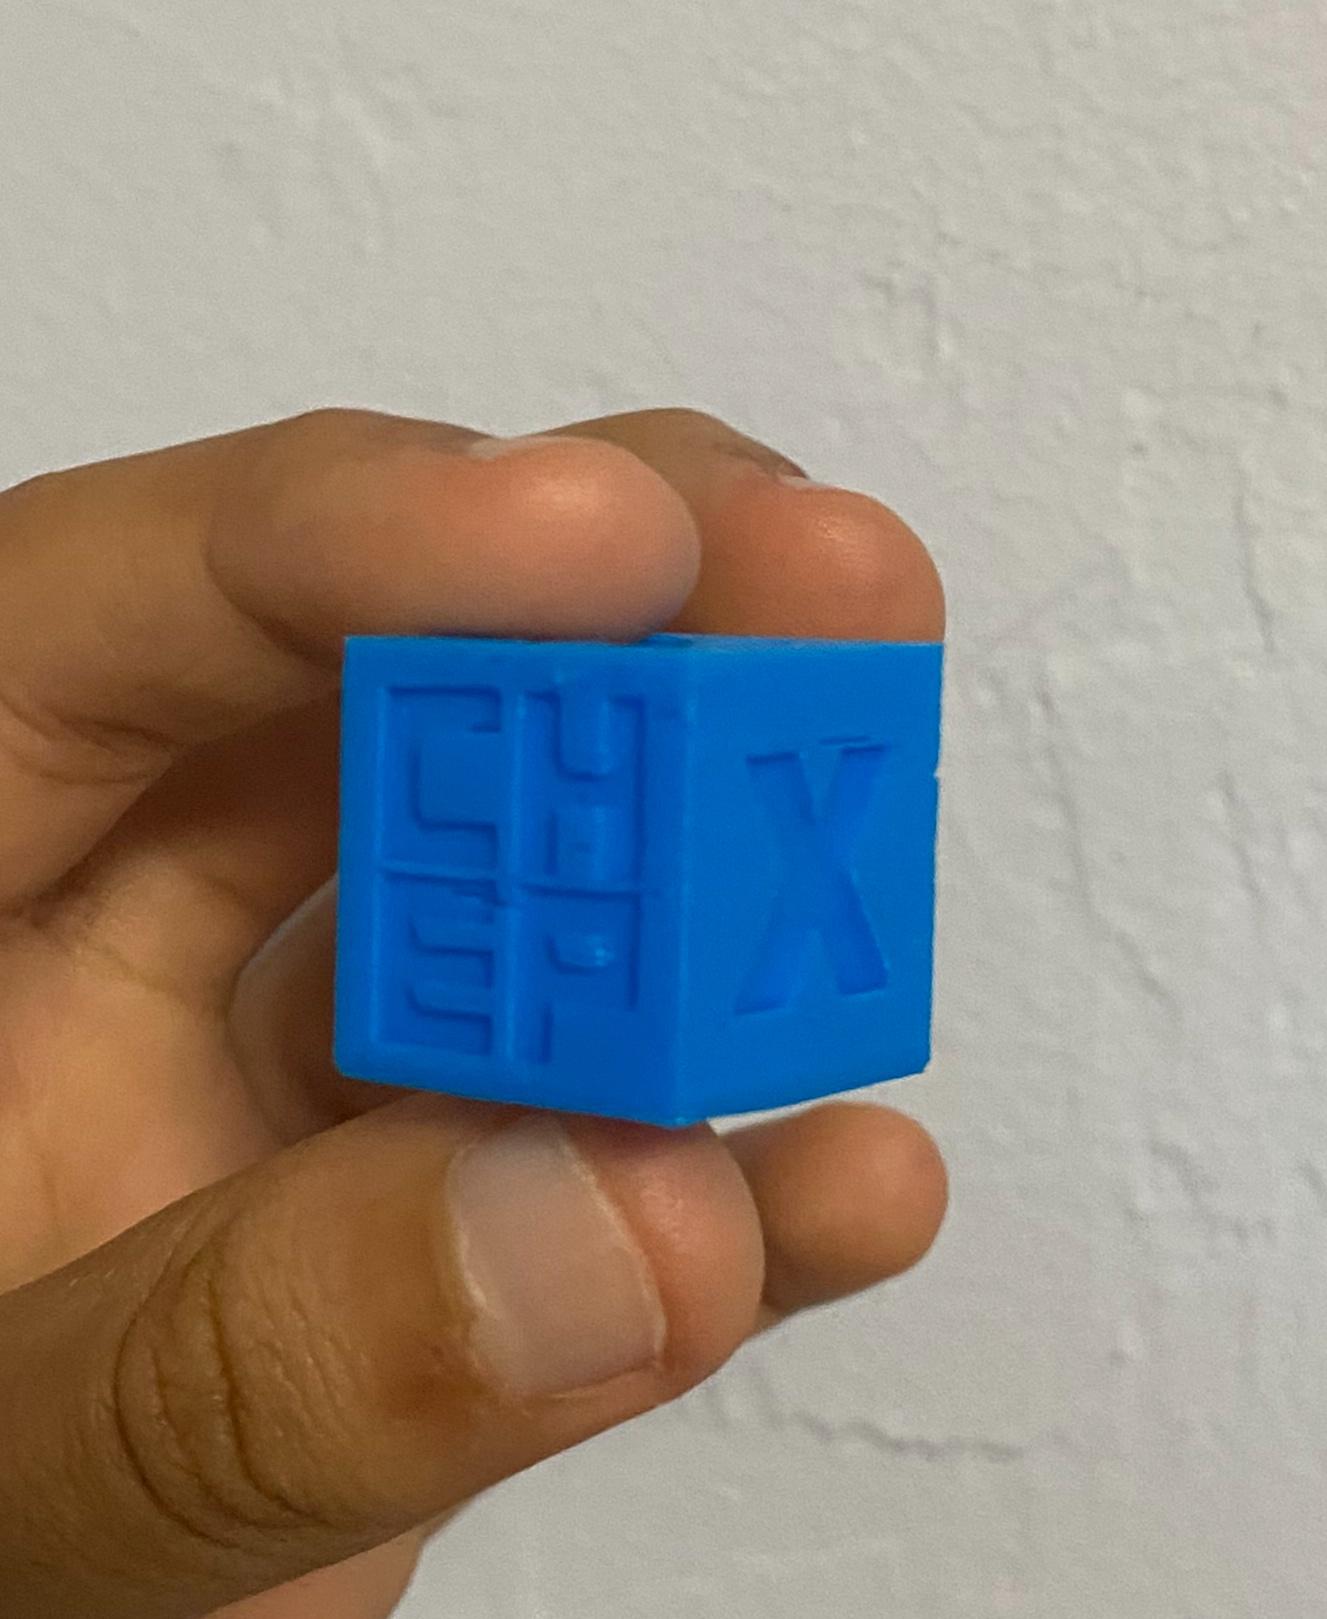 CHEP Cube - Calibration Cube - Good Print, Minor Issues. - 3d model